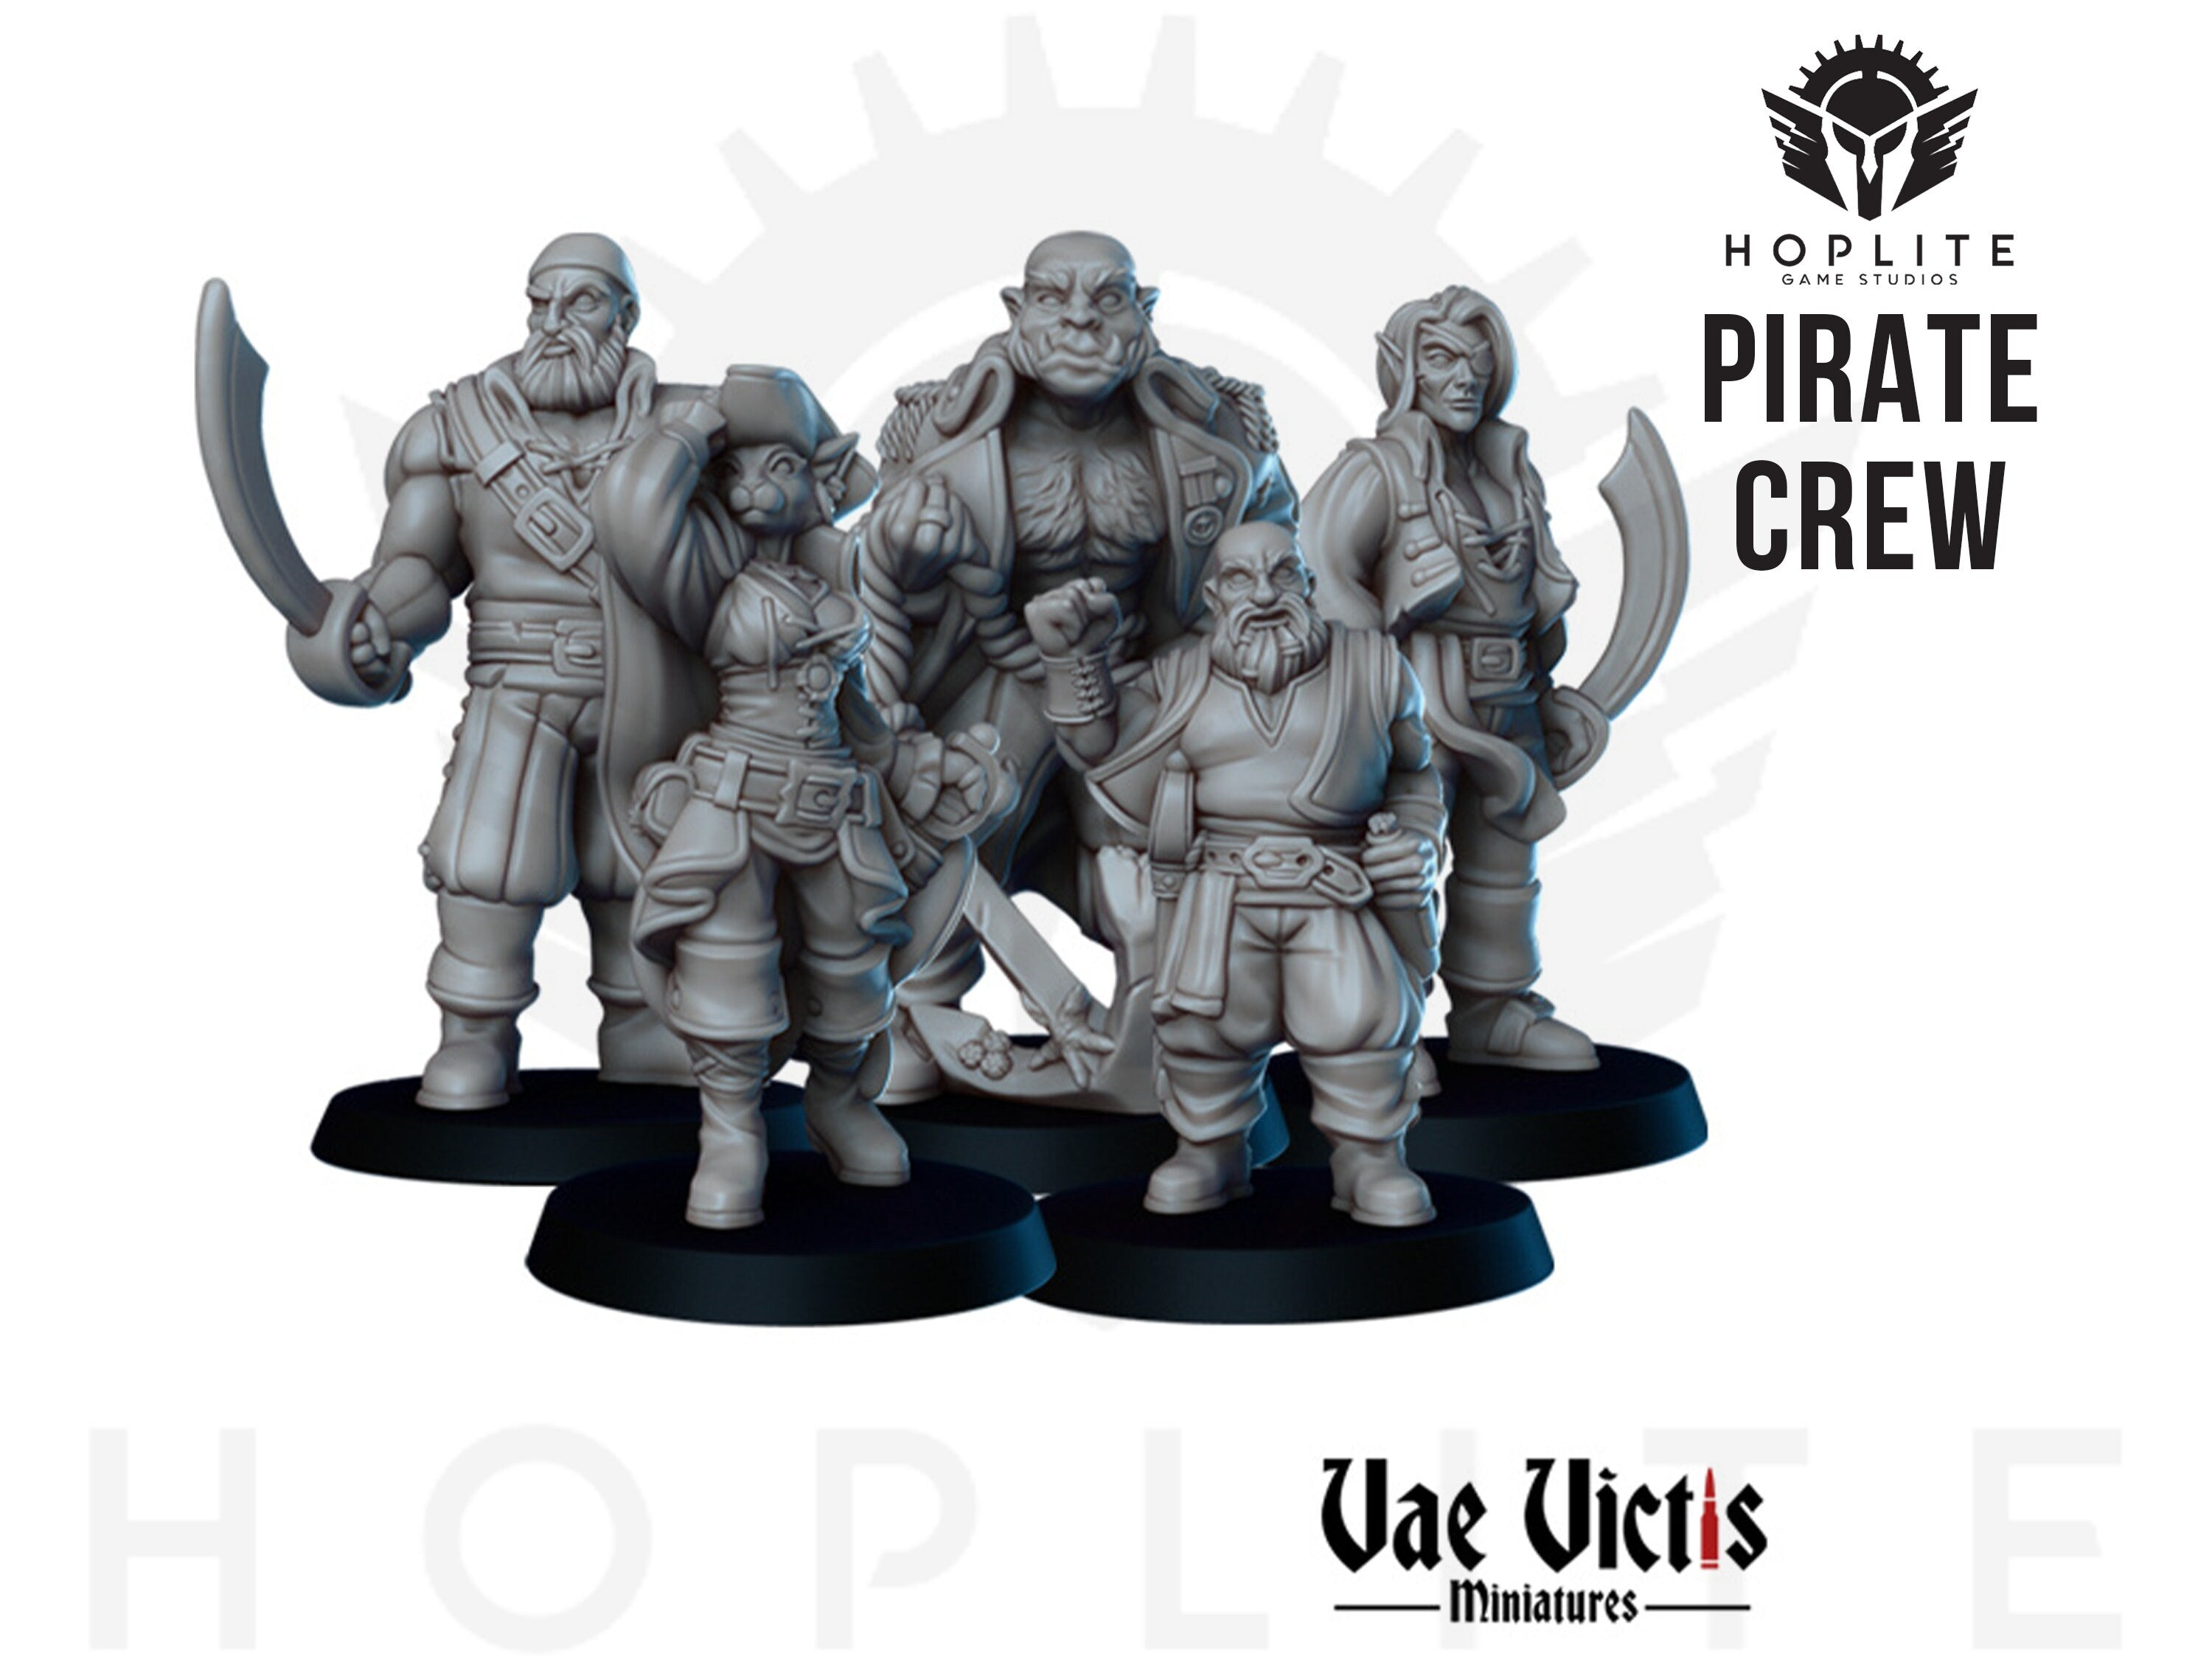 The Pirate Crew